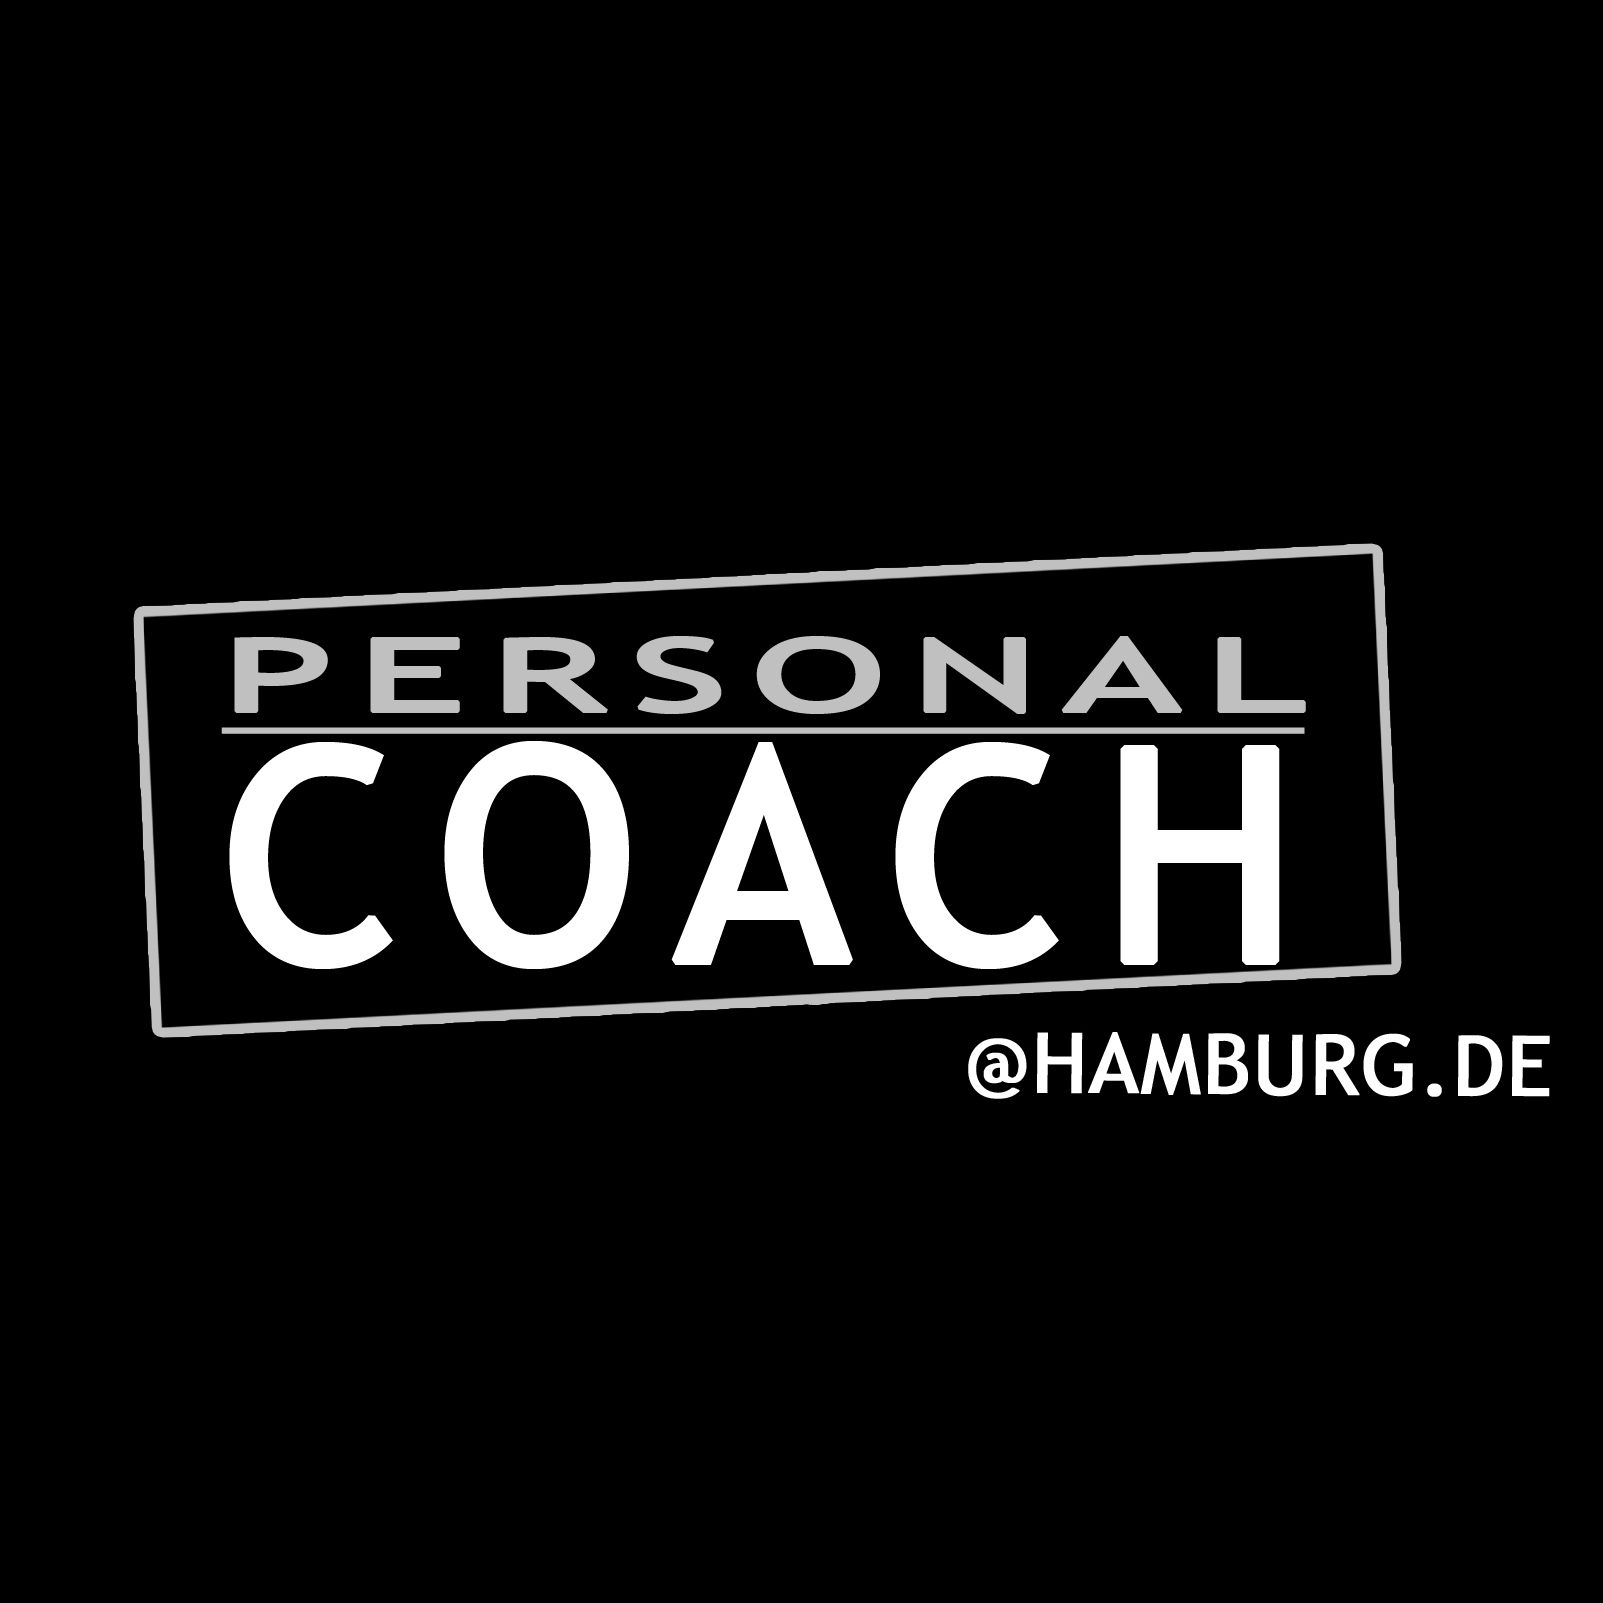 Personal Coach @ Hamburg